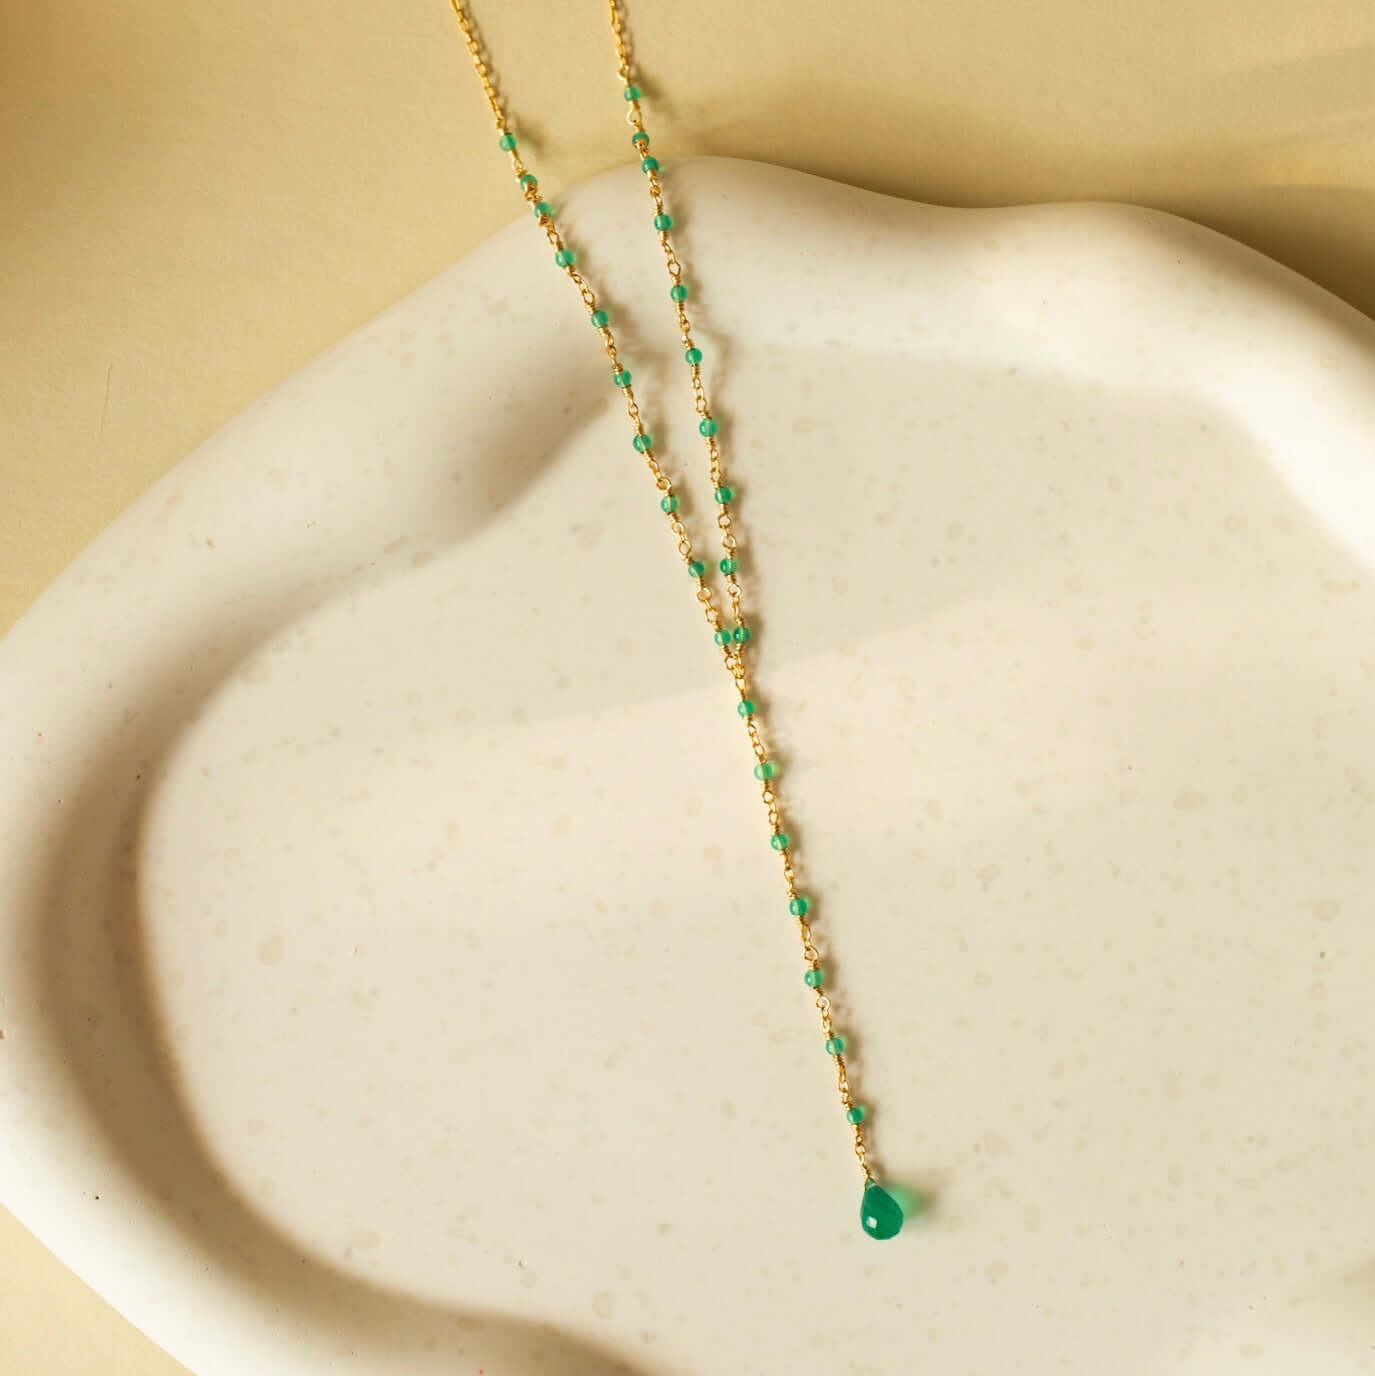 Green onyx pendant on beaded chain.